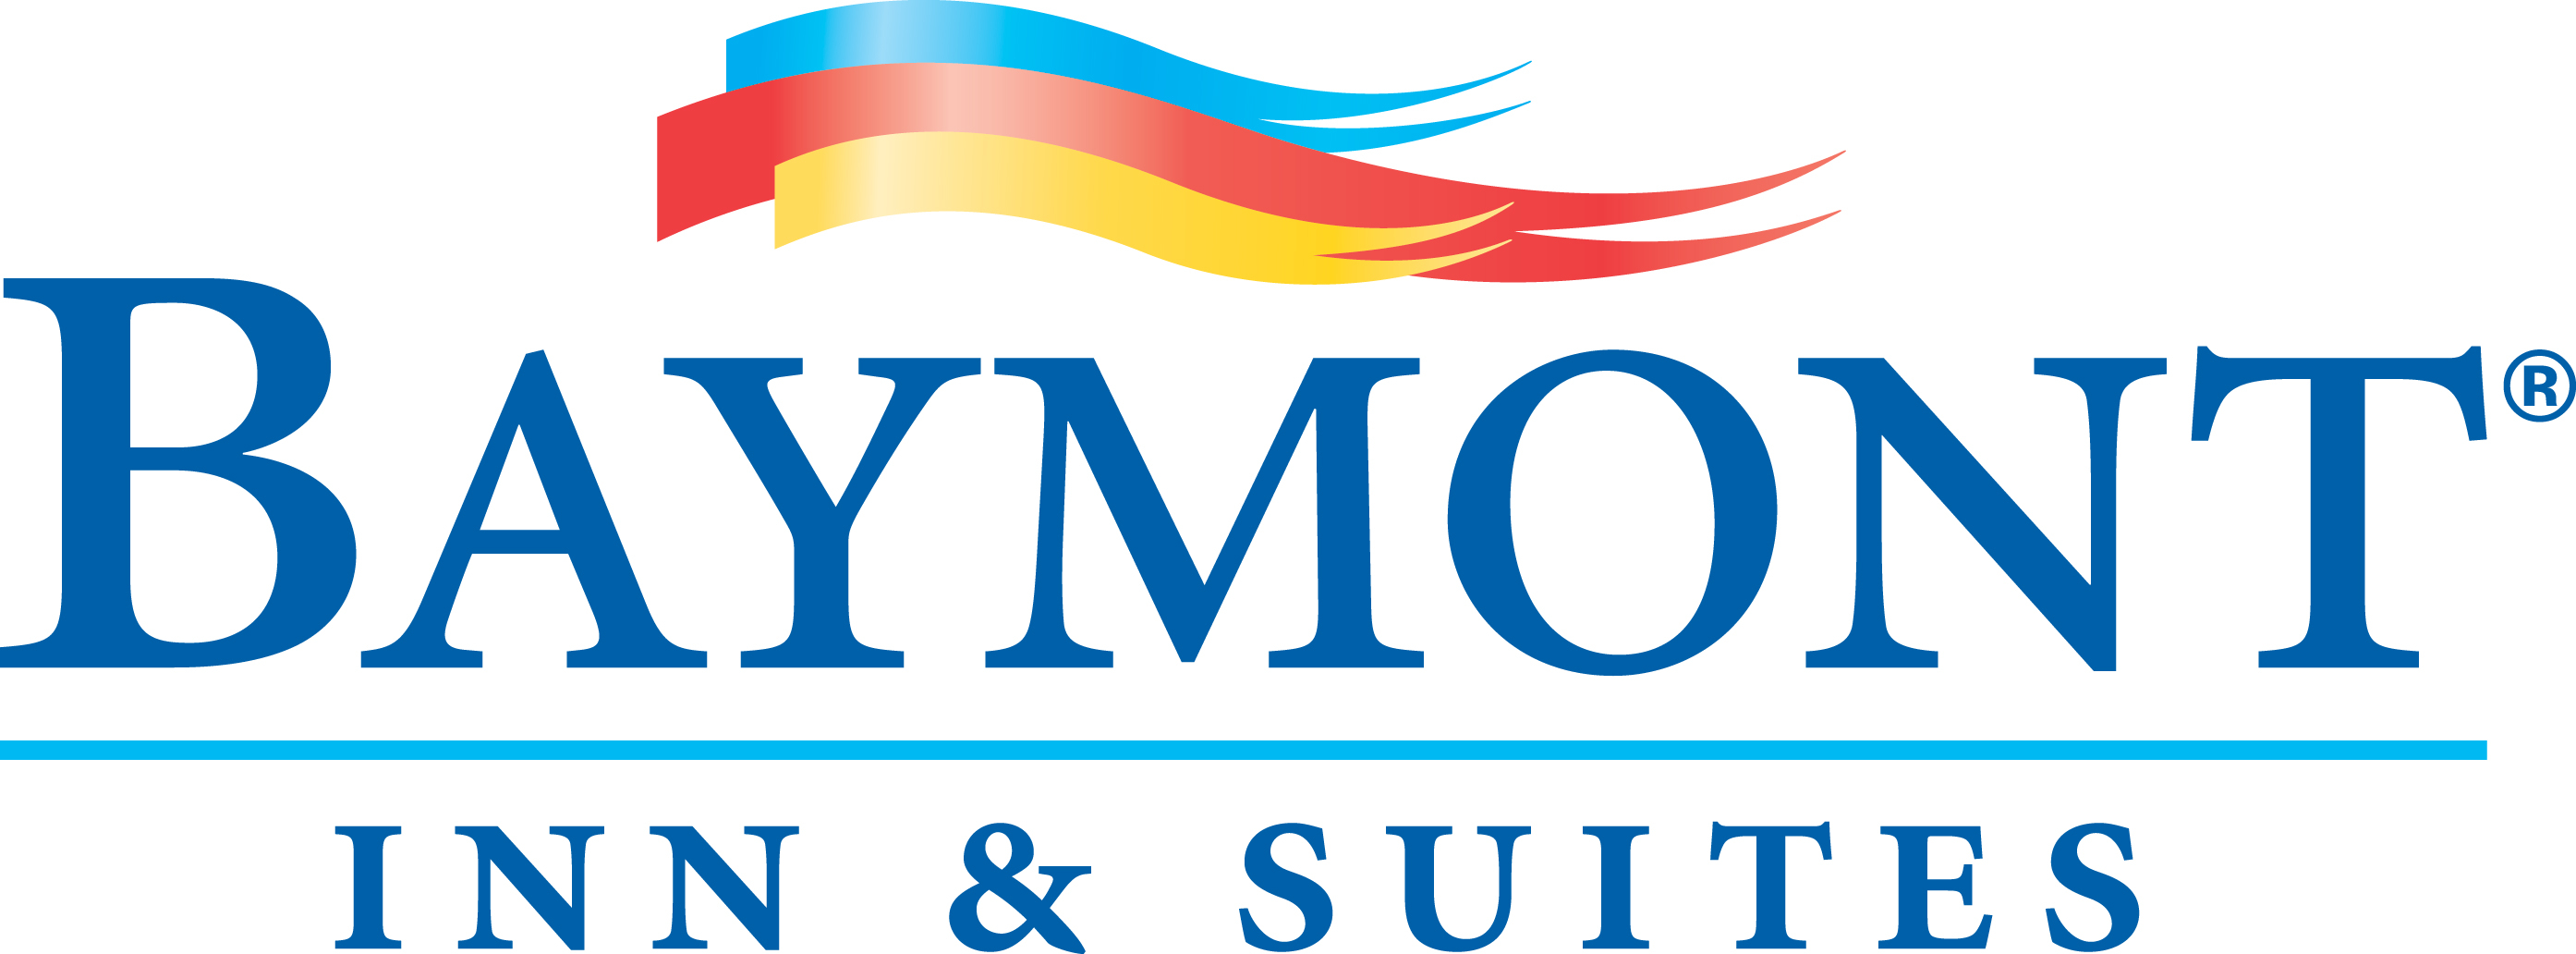 Baymont Inn & Suites®